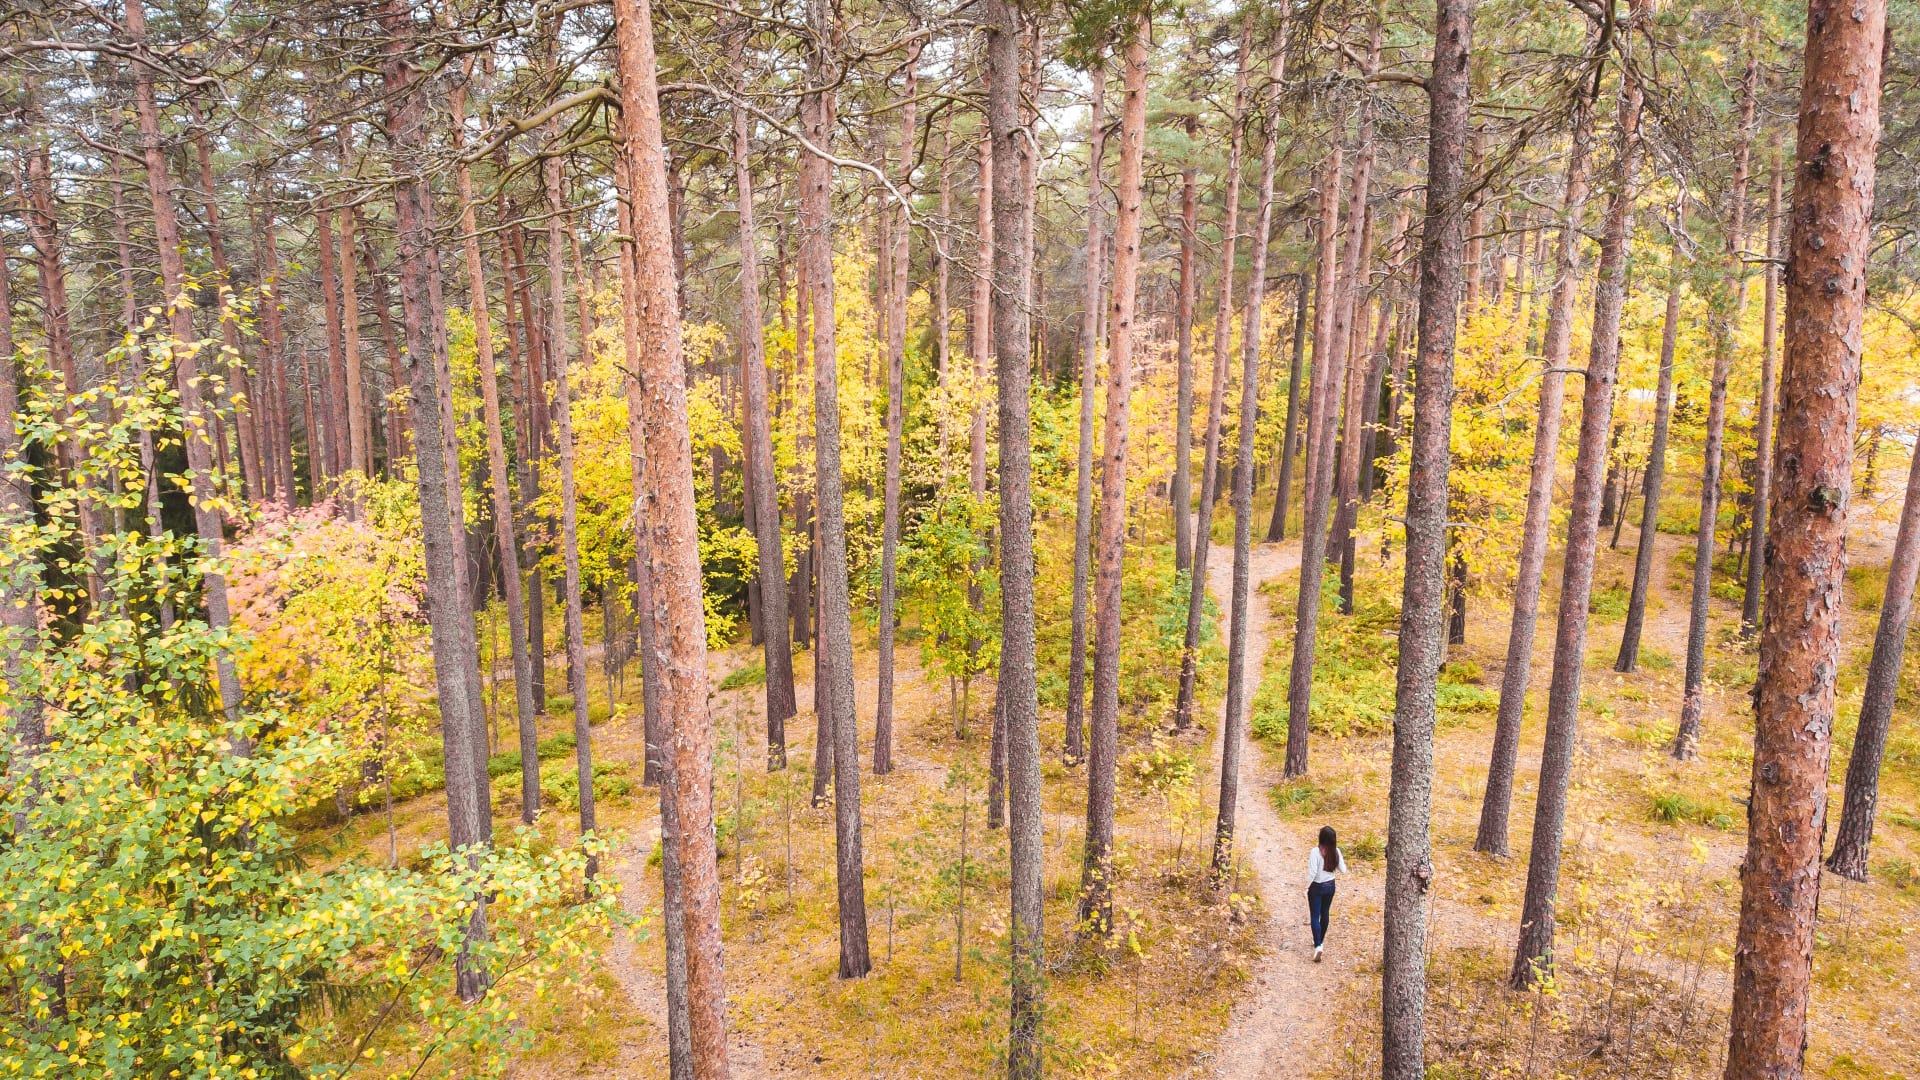 Trails in the Pyynikki forest